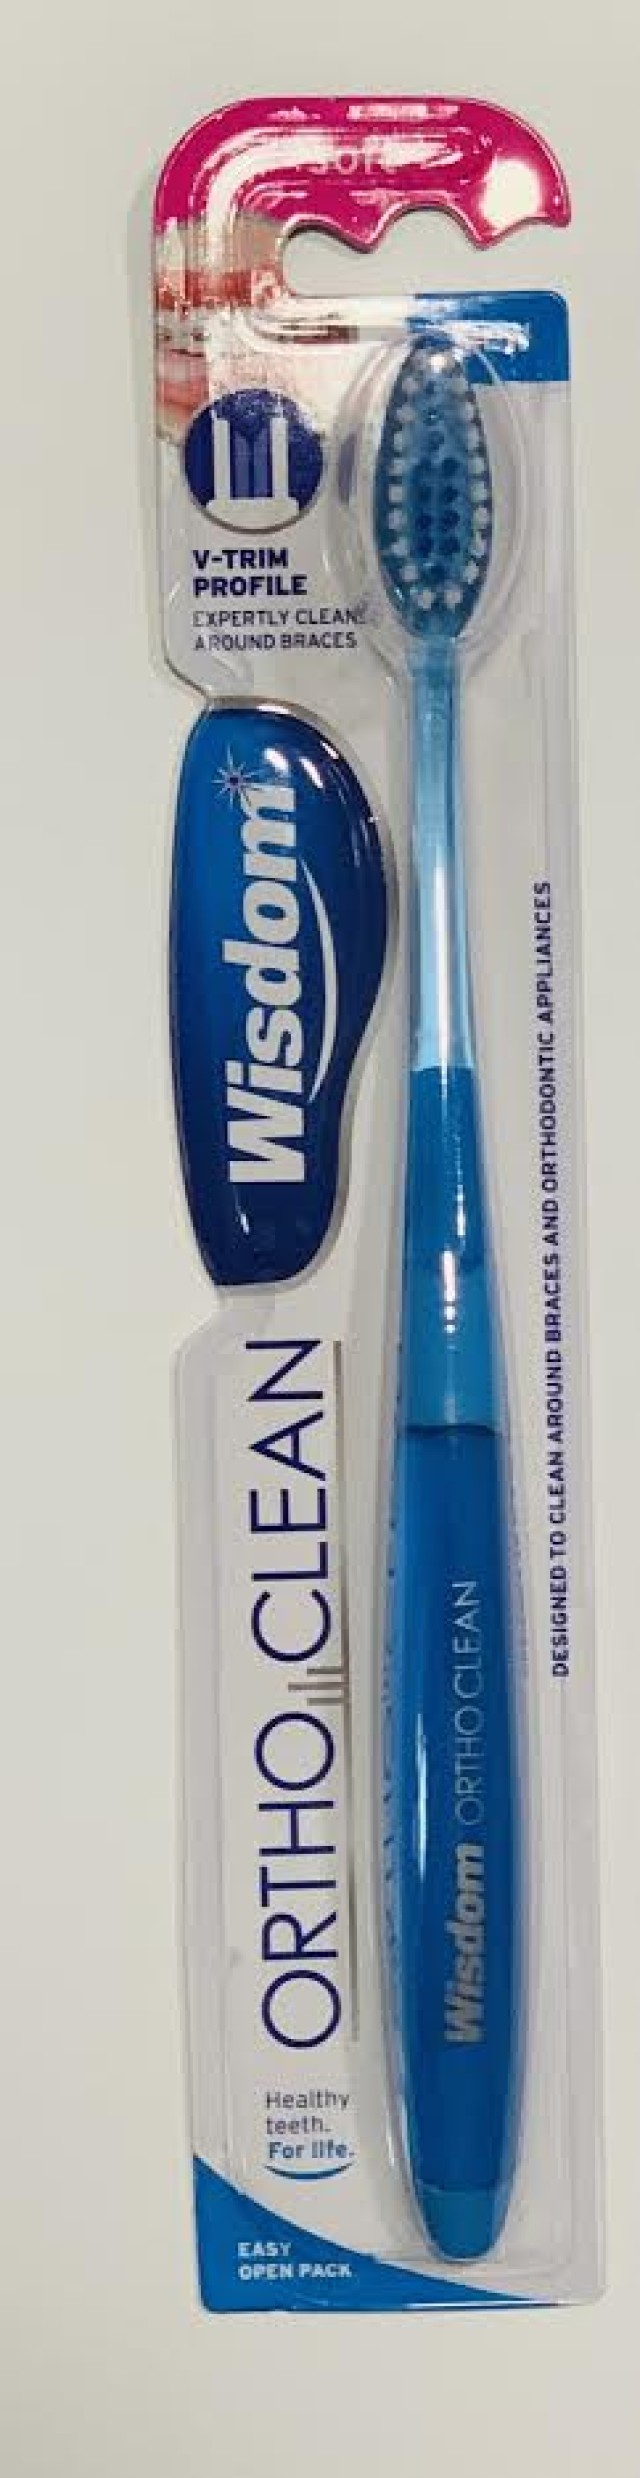 Wisdom Ortho Clean Toothbrush Soft Οδοντόβουρτσα Μαλακή Χρώματα:Μπλέ -Φούξια 1 Τεμάχιο